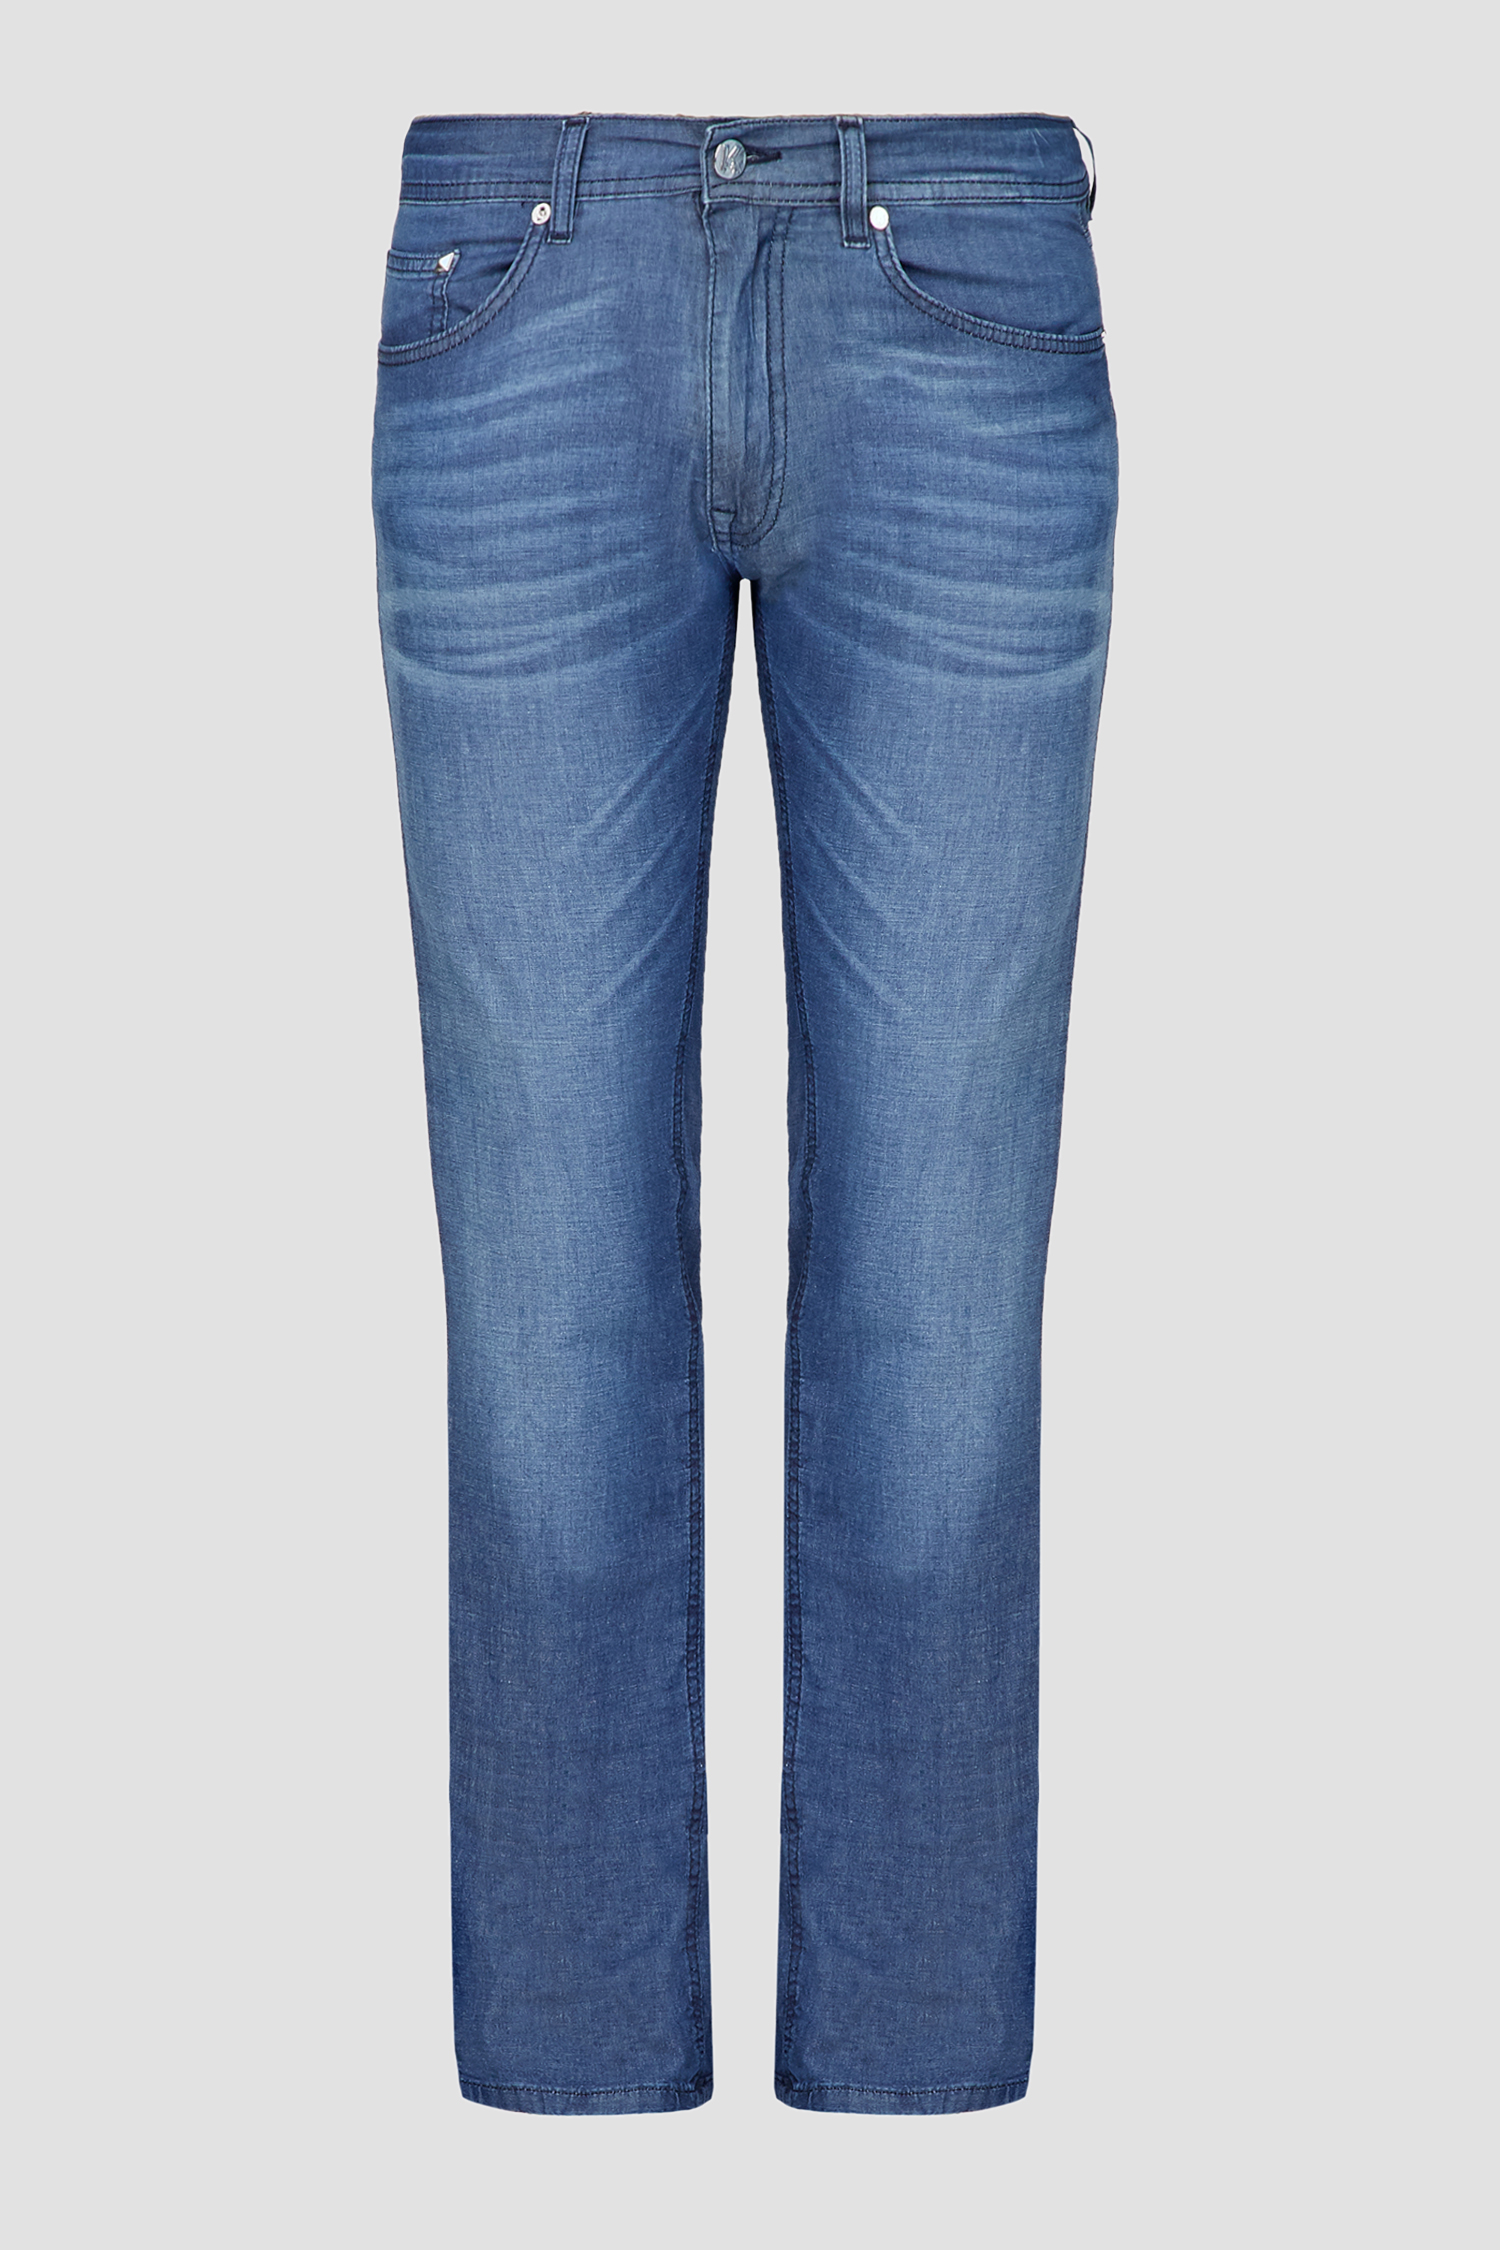 Мужские синие джинсы Karl Lagerfeld 521806.265840;690